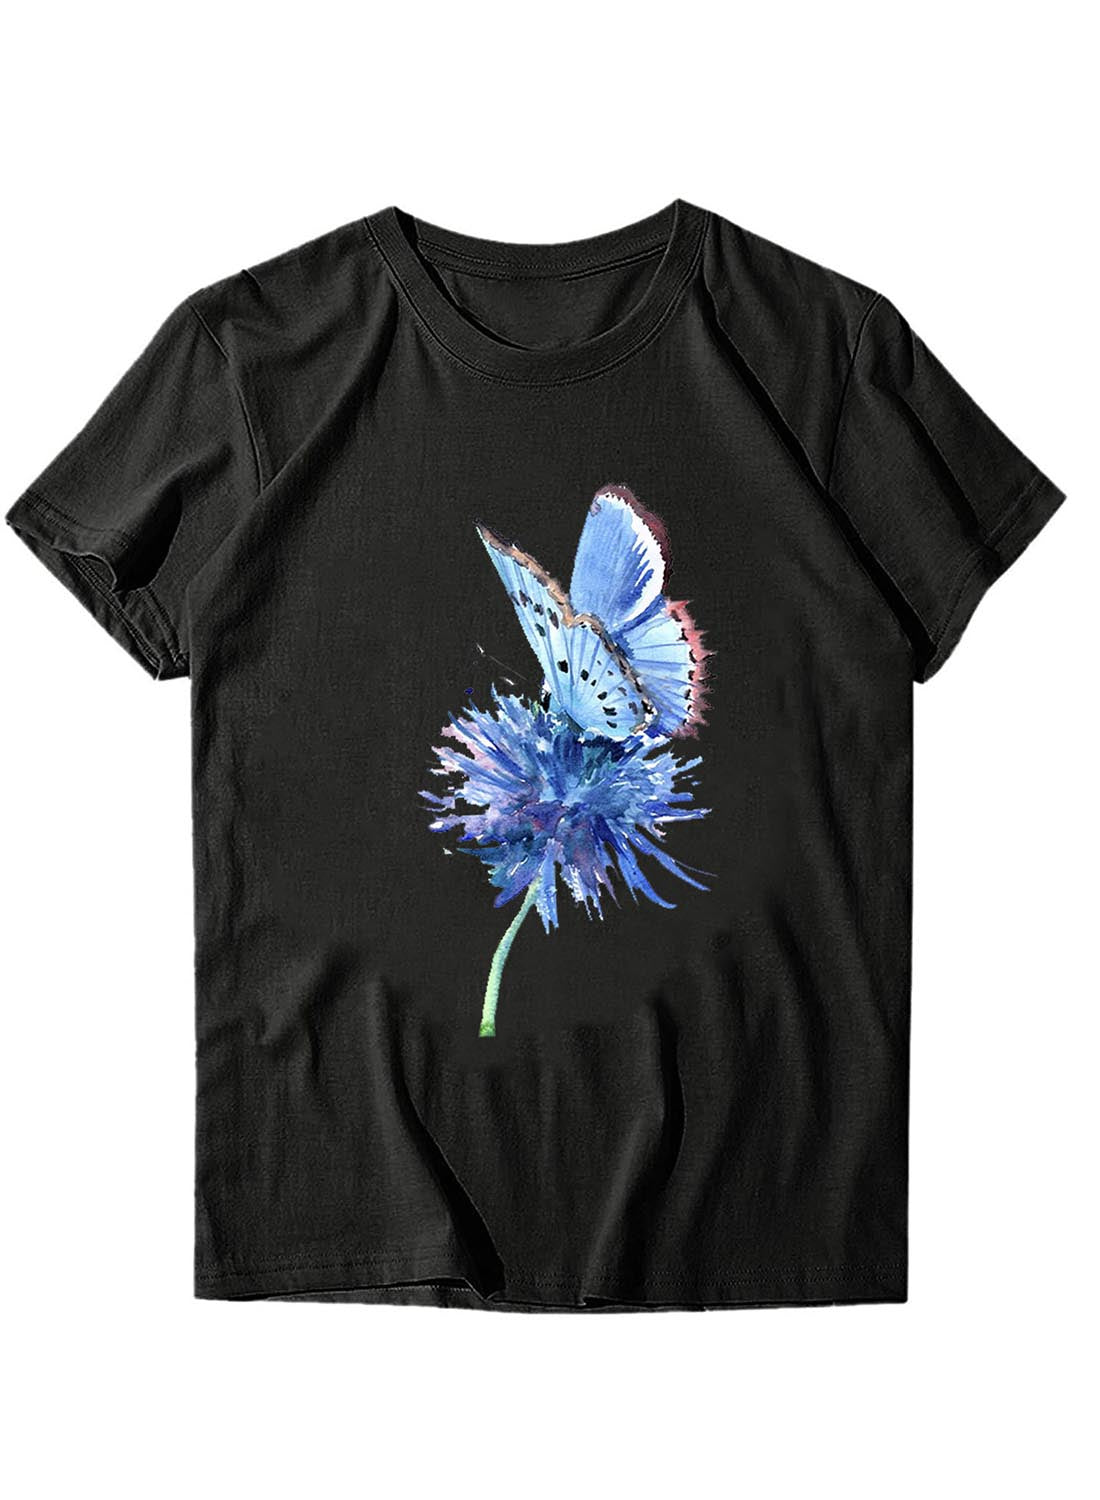 Black Women's T-shirts Dandelion & Butterfly Print T-shirt LC2527758-2